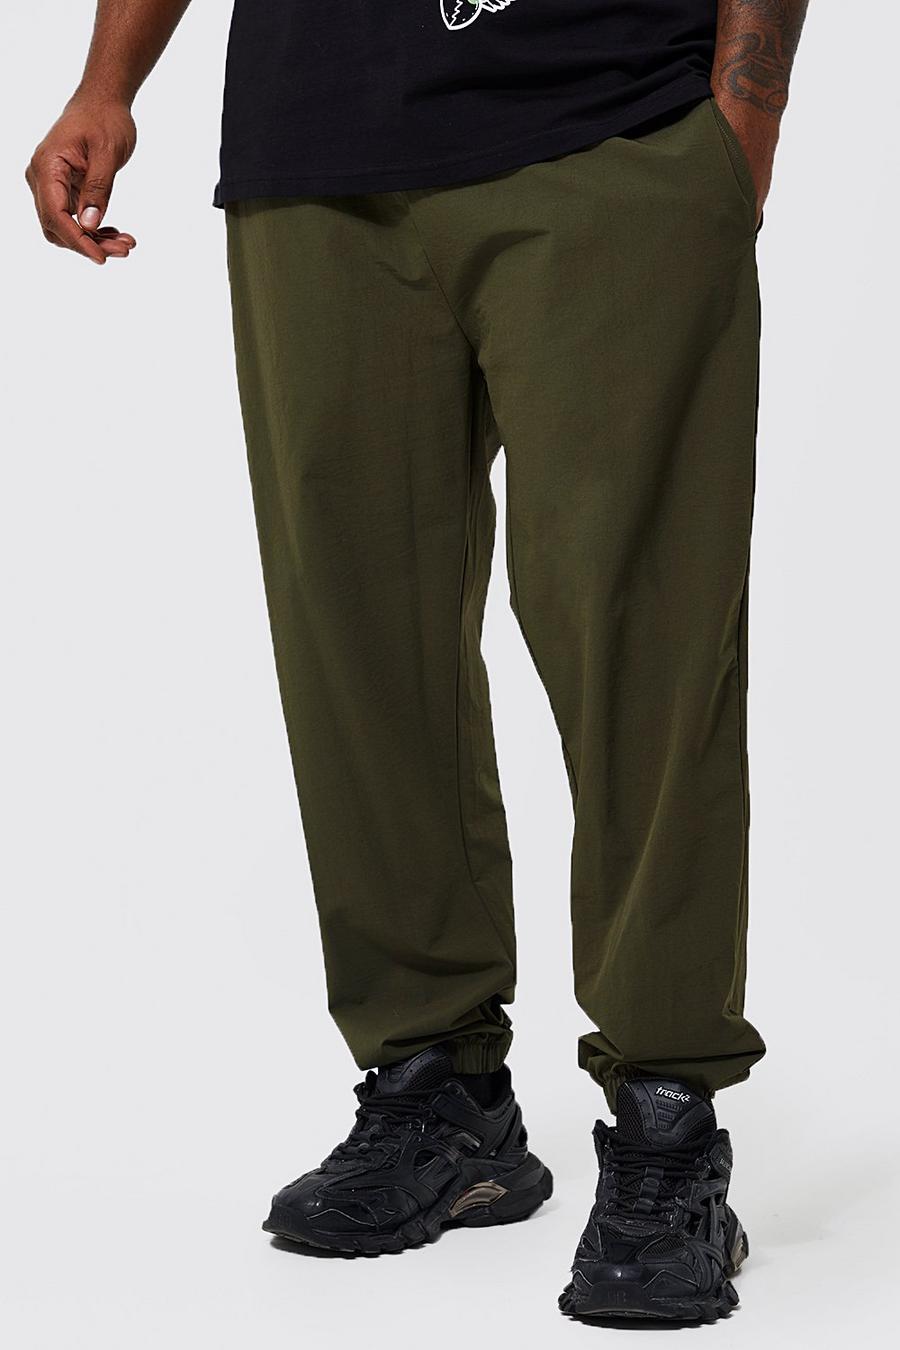 Pantalón Plus ajustado técnico con botamanga, Olive gerde